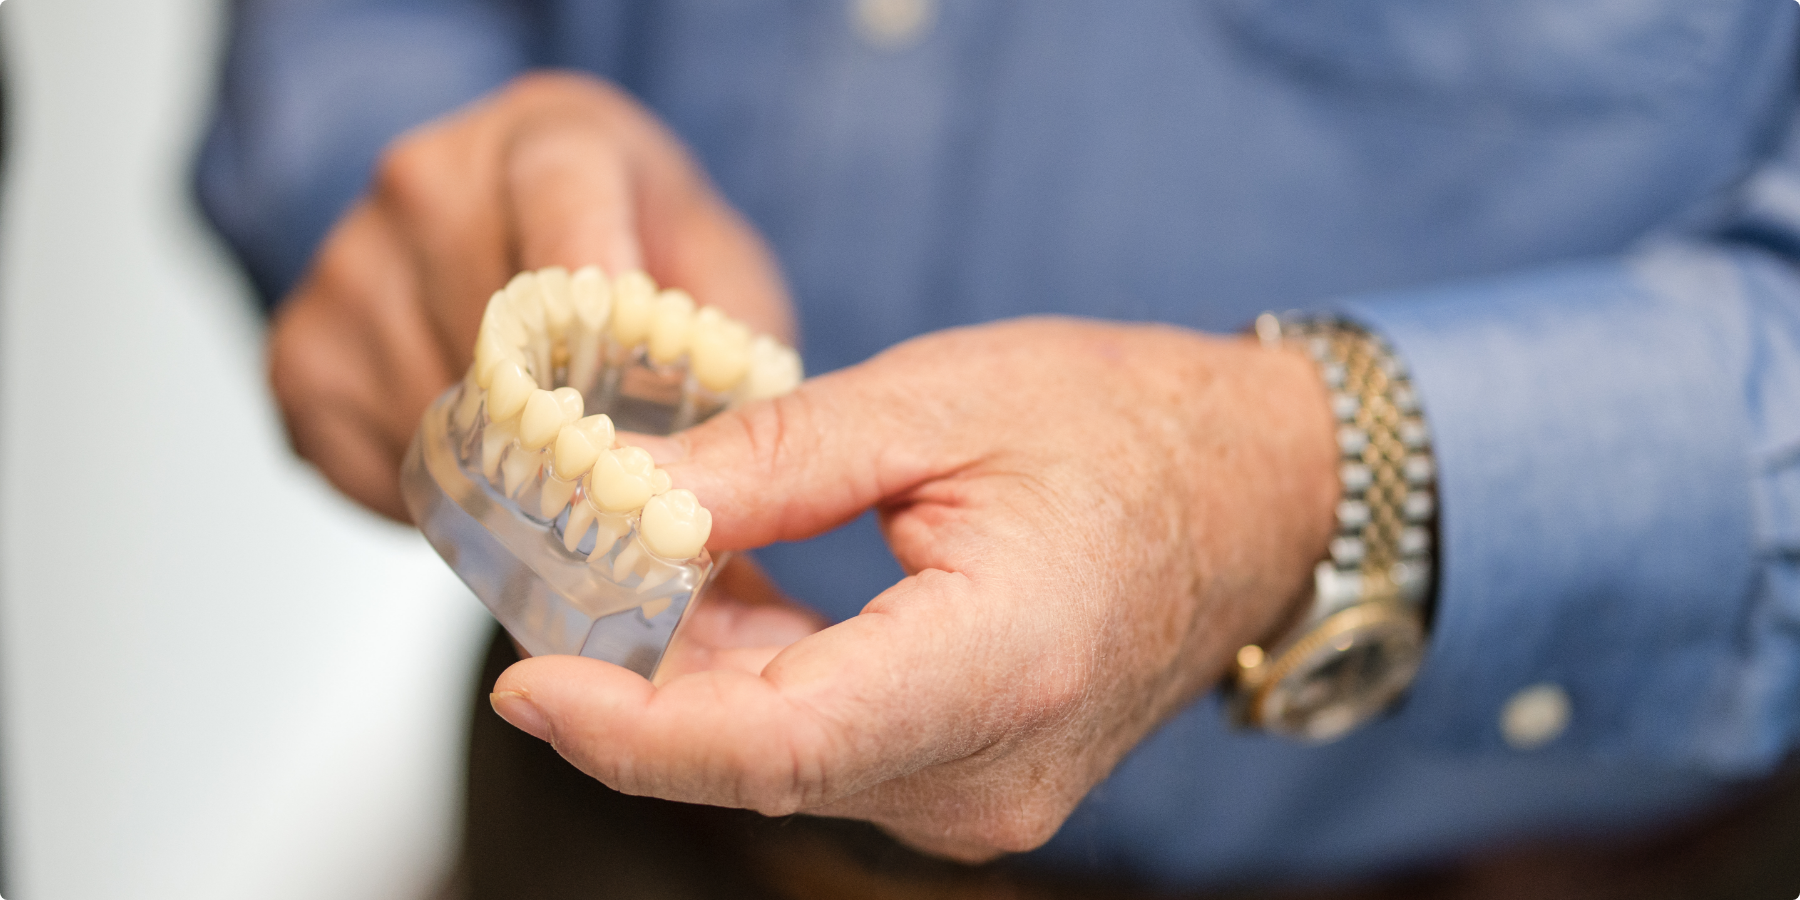 Procedure page snap on denture chattanooga periodontics dental implants